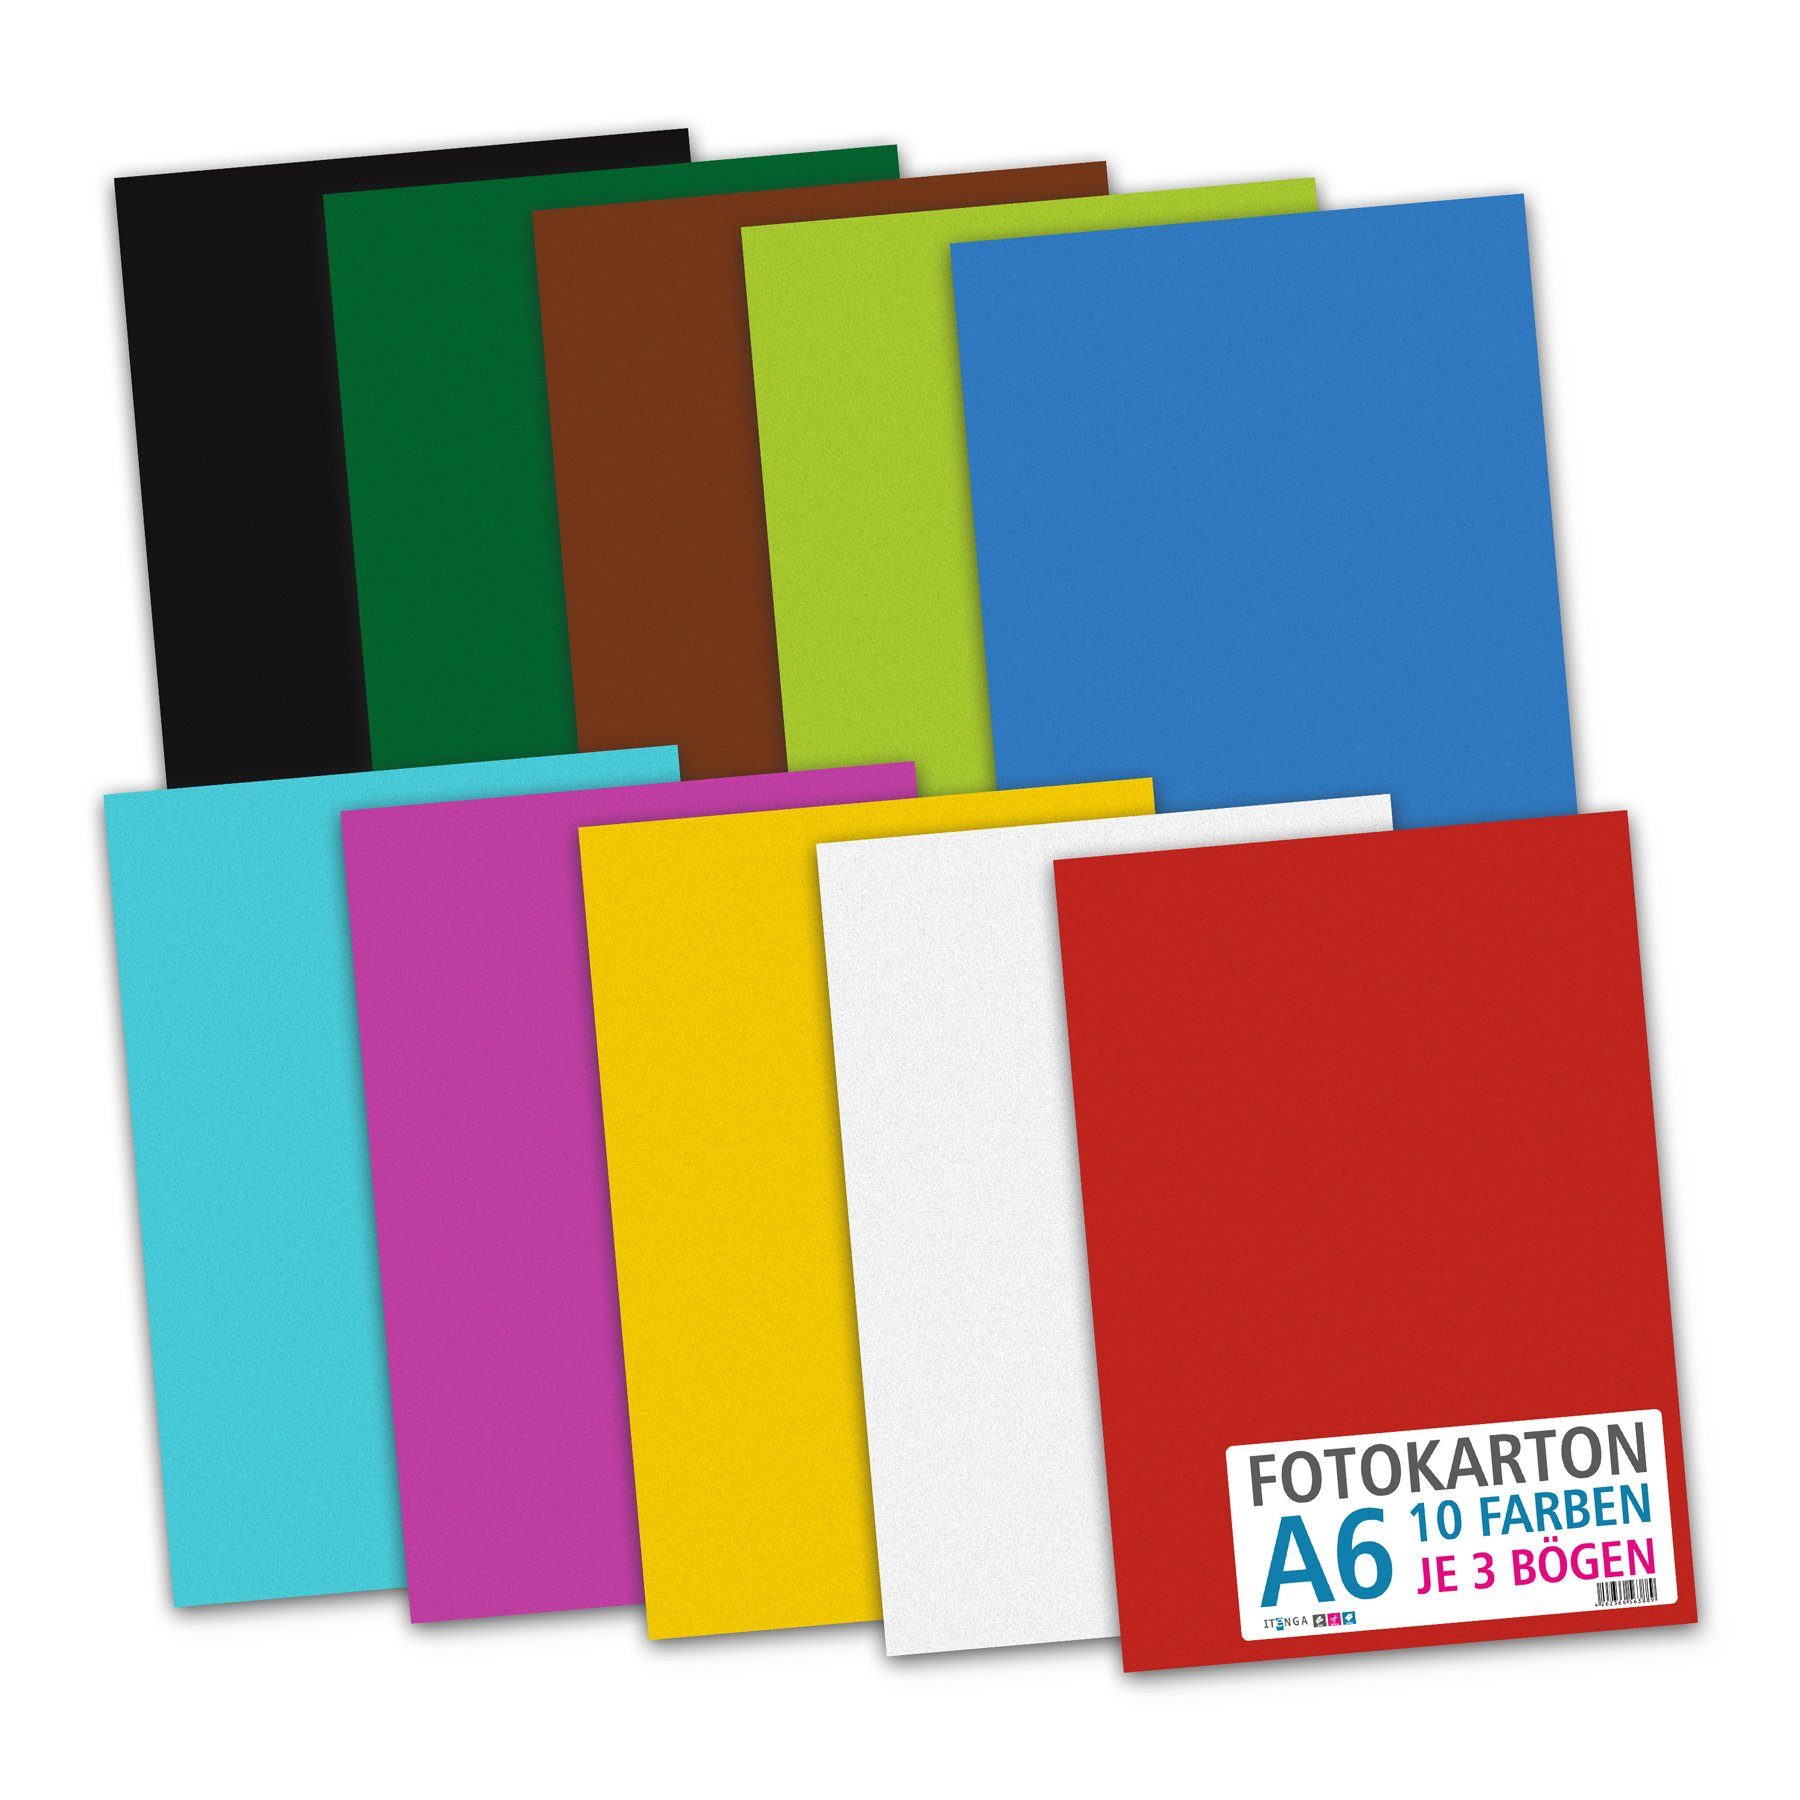 p itenga - - DIN g/qm Fotokarton 10 30 300 Standardfarben A6 - Blatt Bastelkartonpapier - itenga